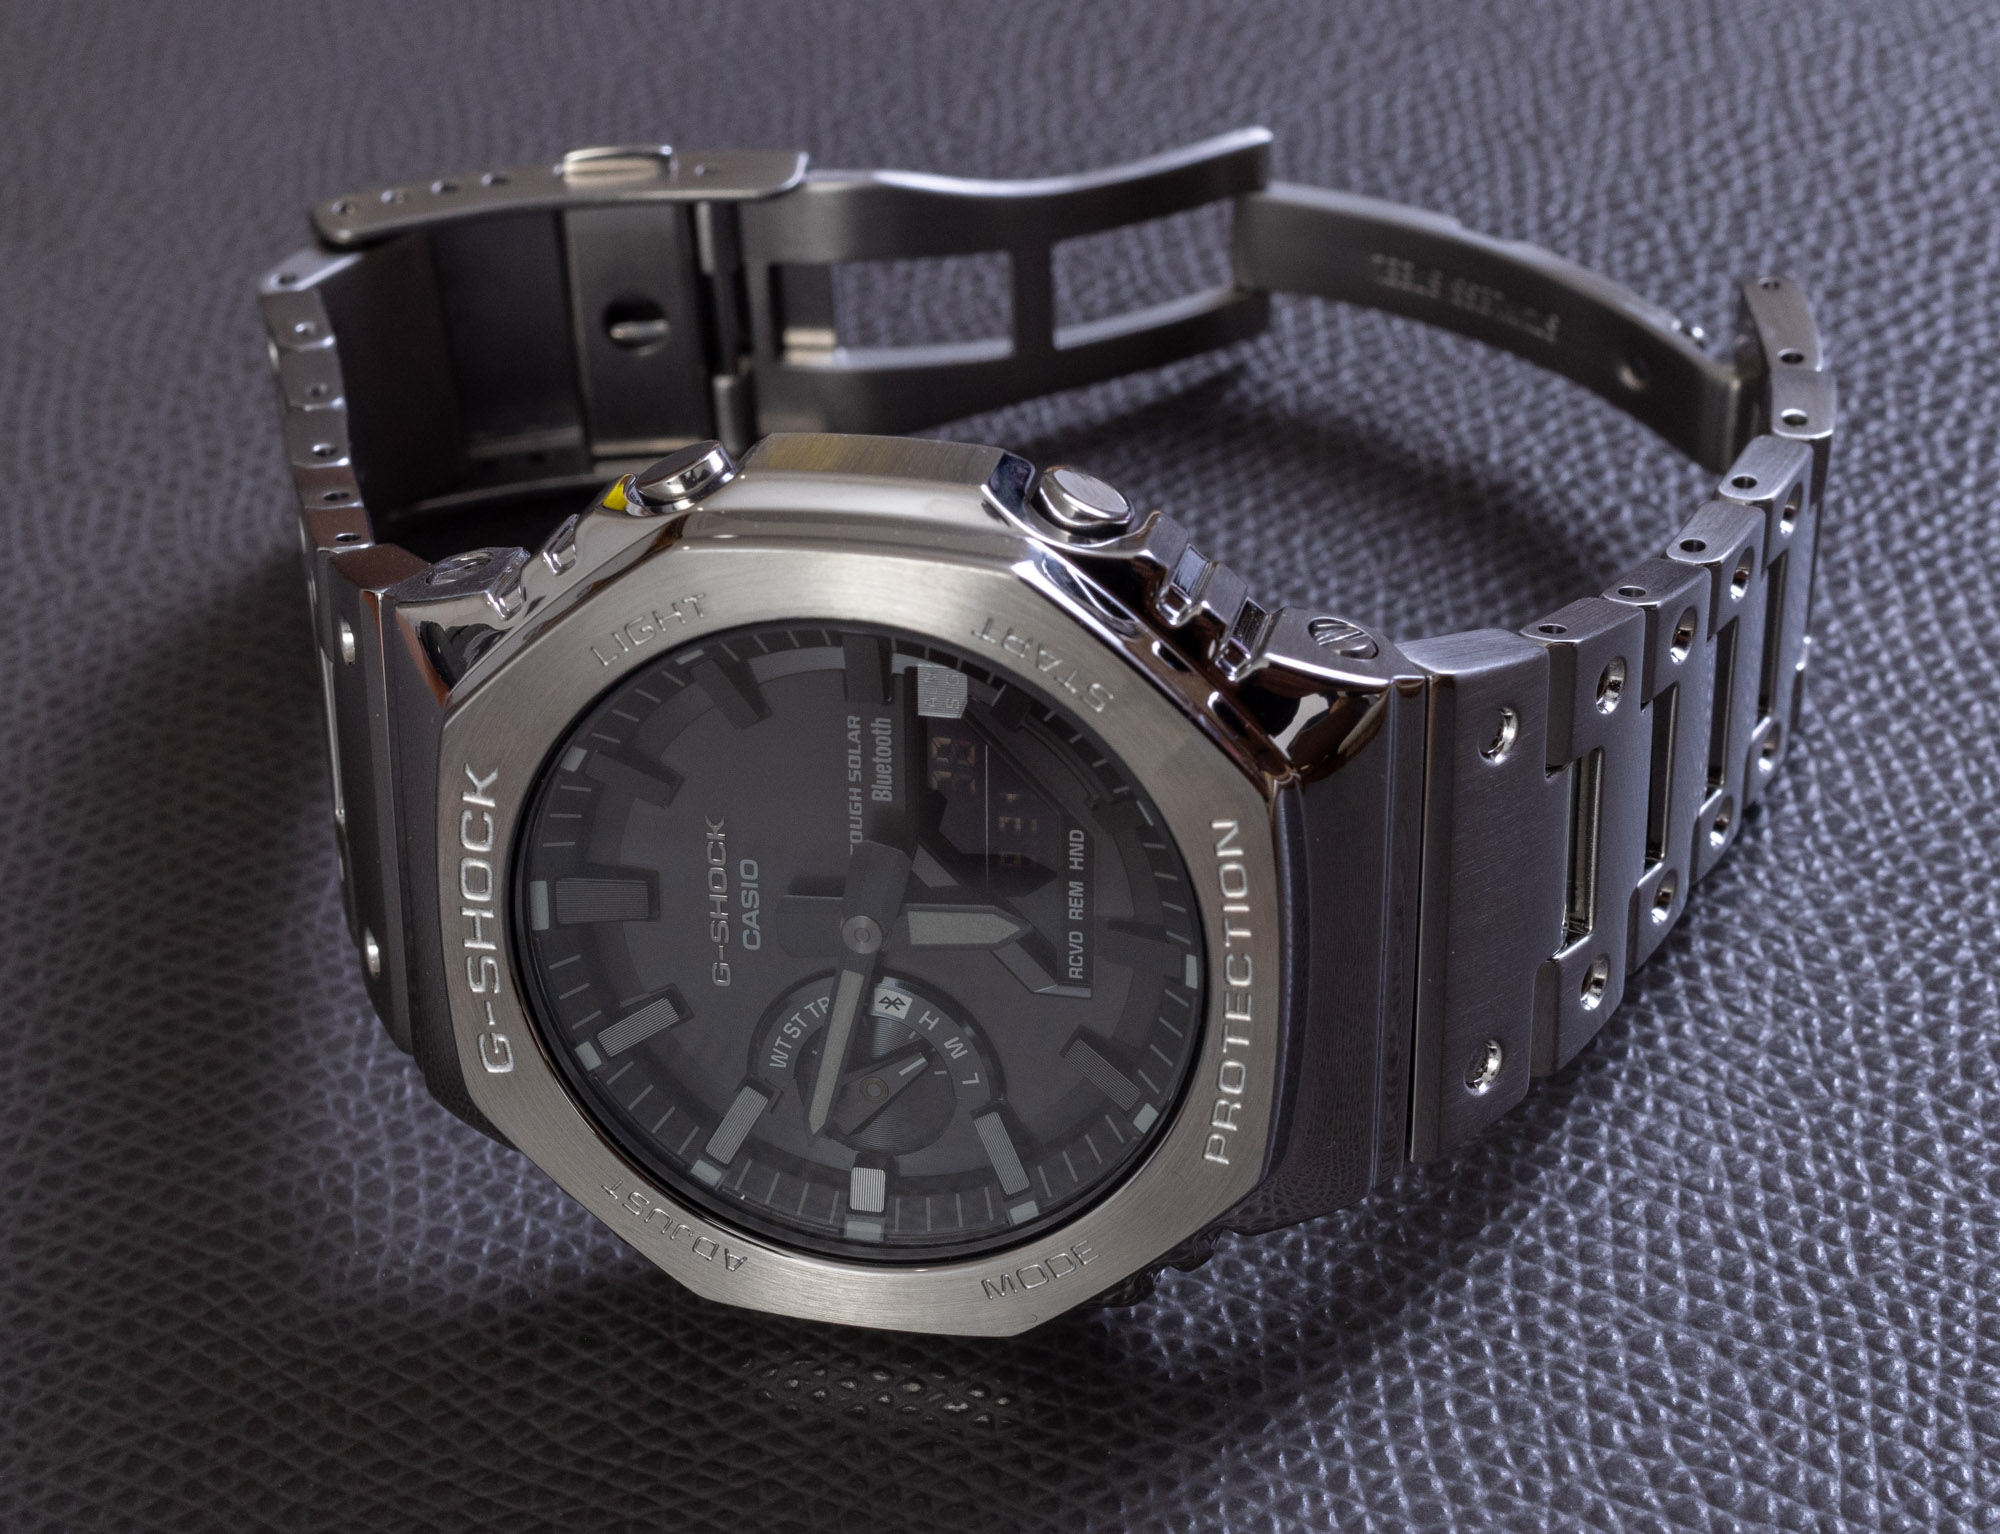 Bracelet Full-Metal GMB2100 | Review: Casio G-Shock aBlogtoWatch Watch On In